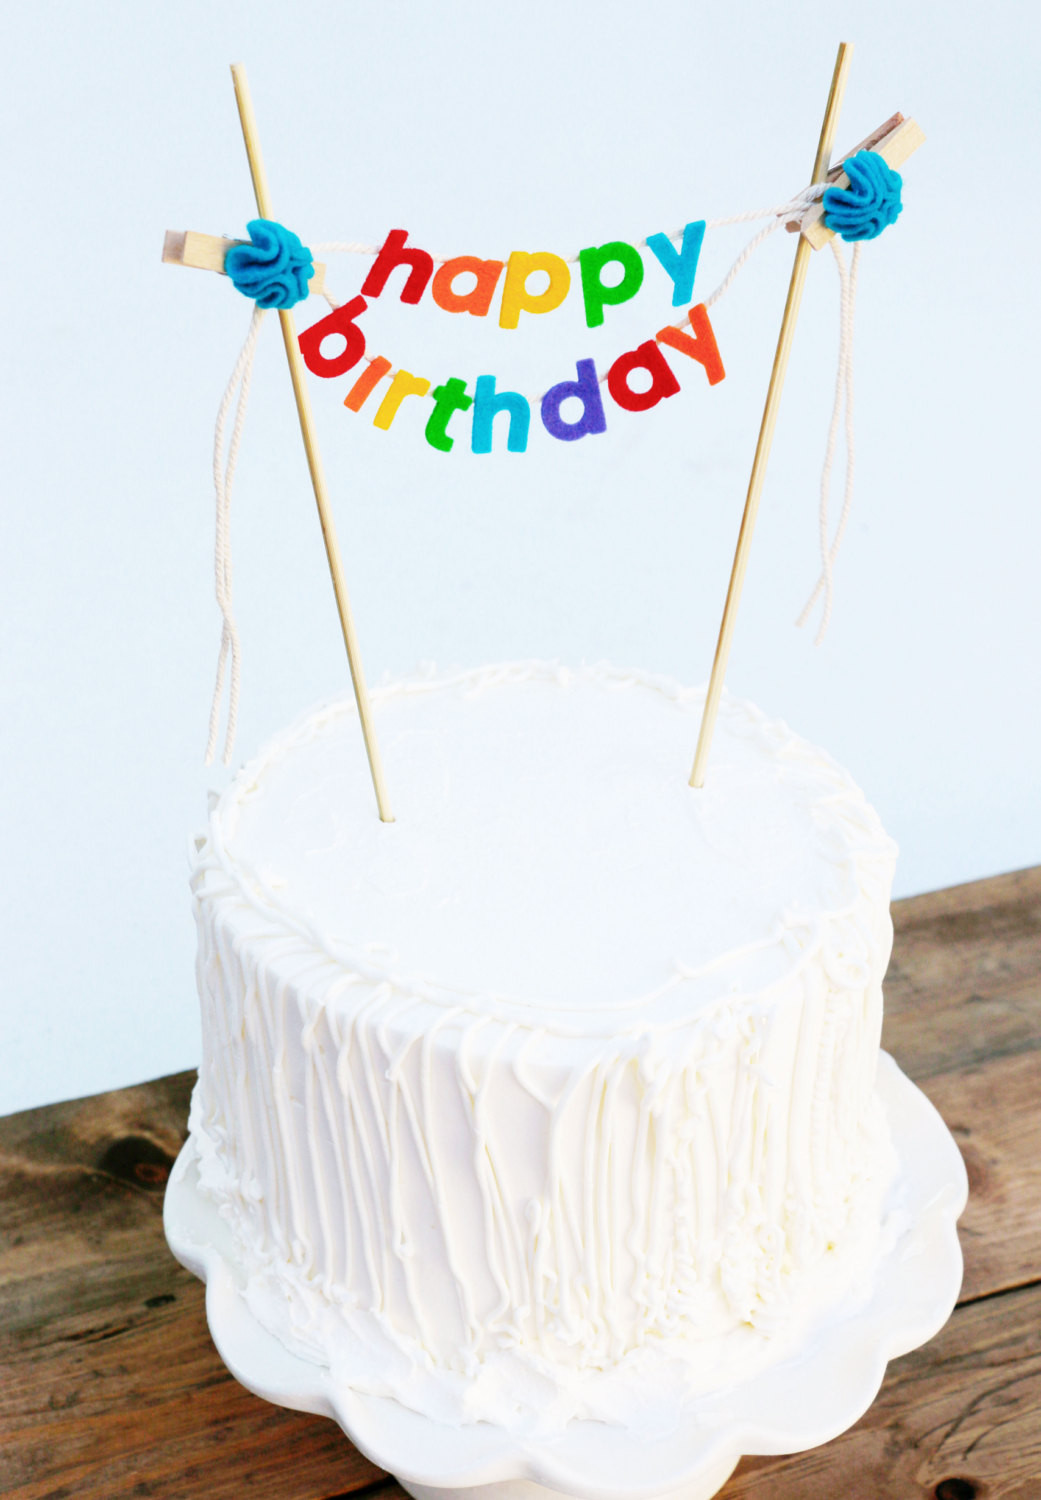 Best ideas about Happy Birthday Cake Banner
. Save or Pin Birthday Cake Banner Birthday Cake Topper by pipsqueakandbean Now.